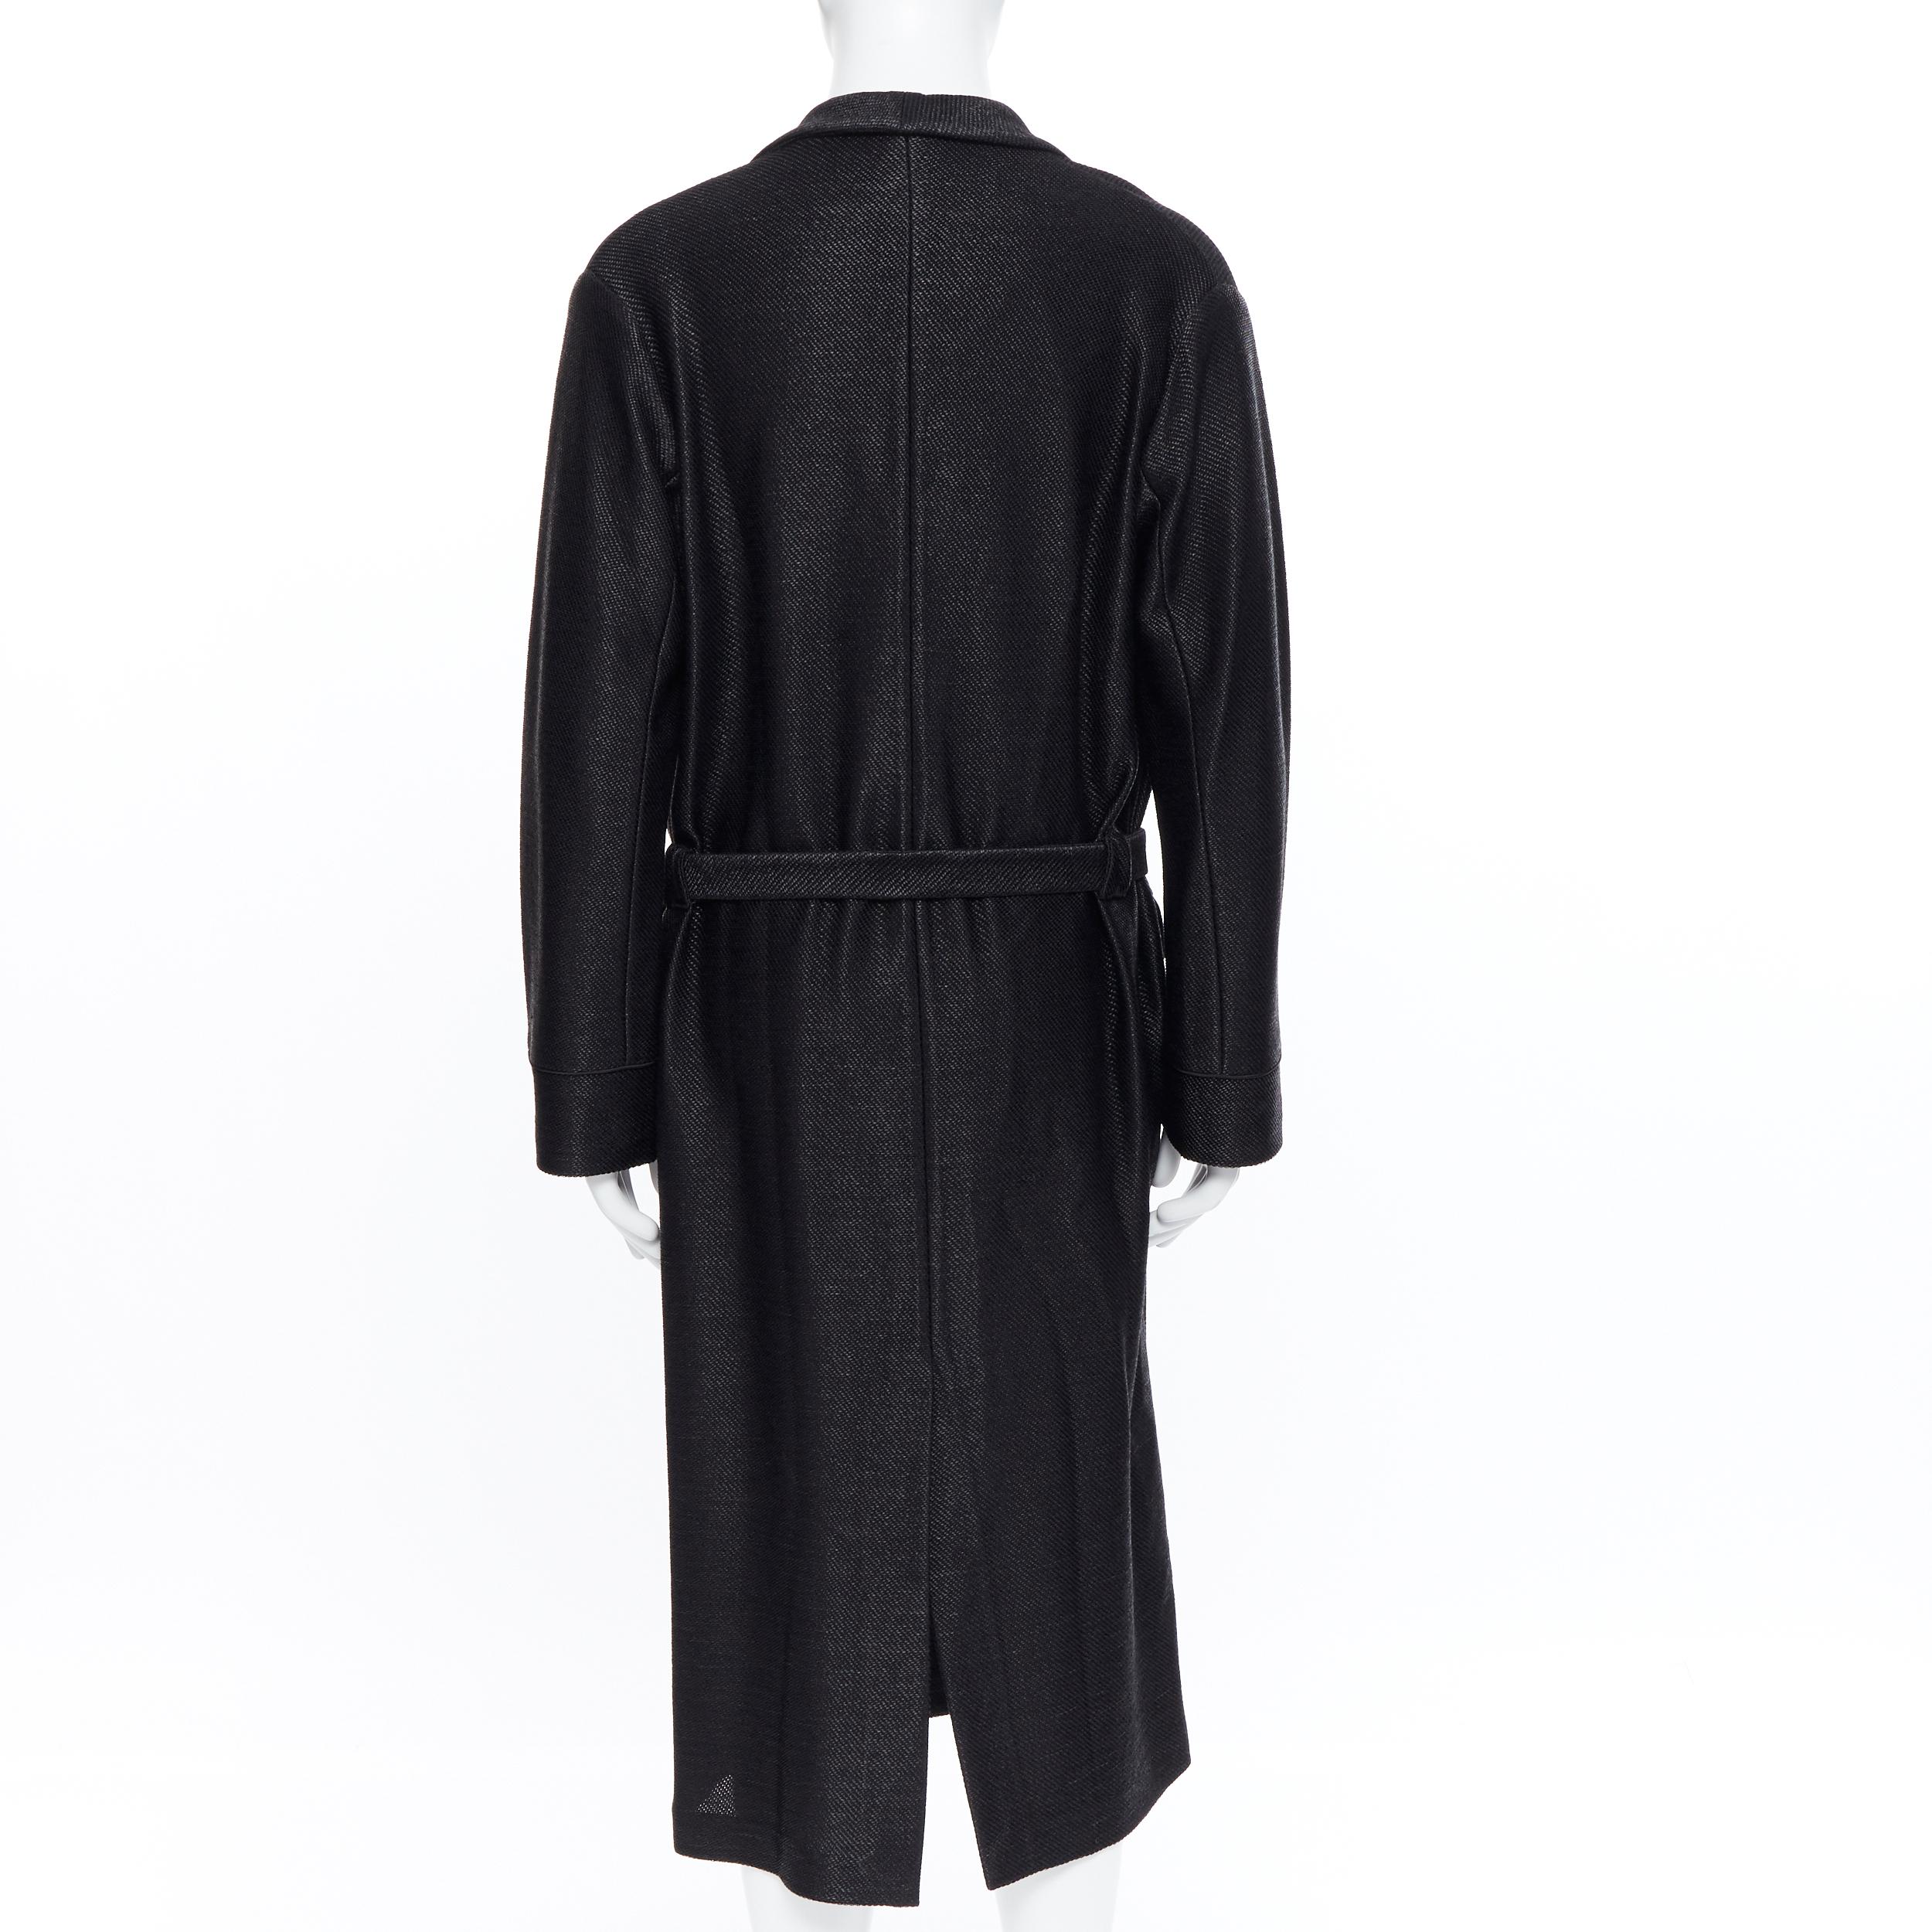 new LA PERLA MENSWEAR Runway black lacquered raffia weave belted robe coat M 1